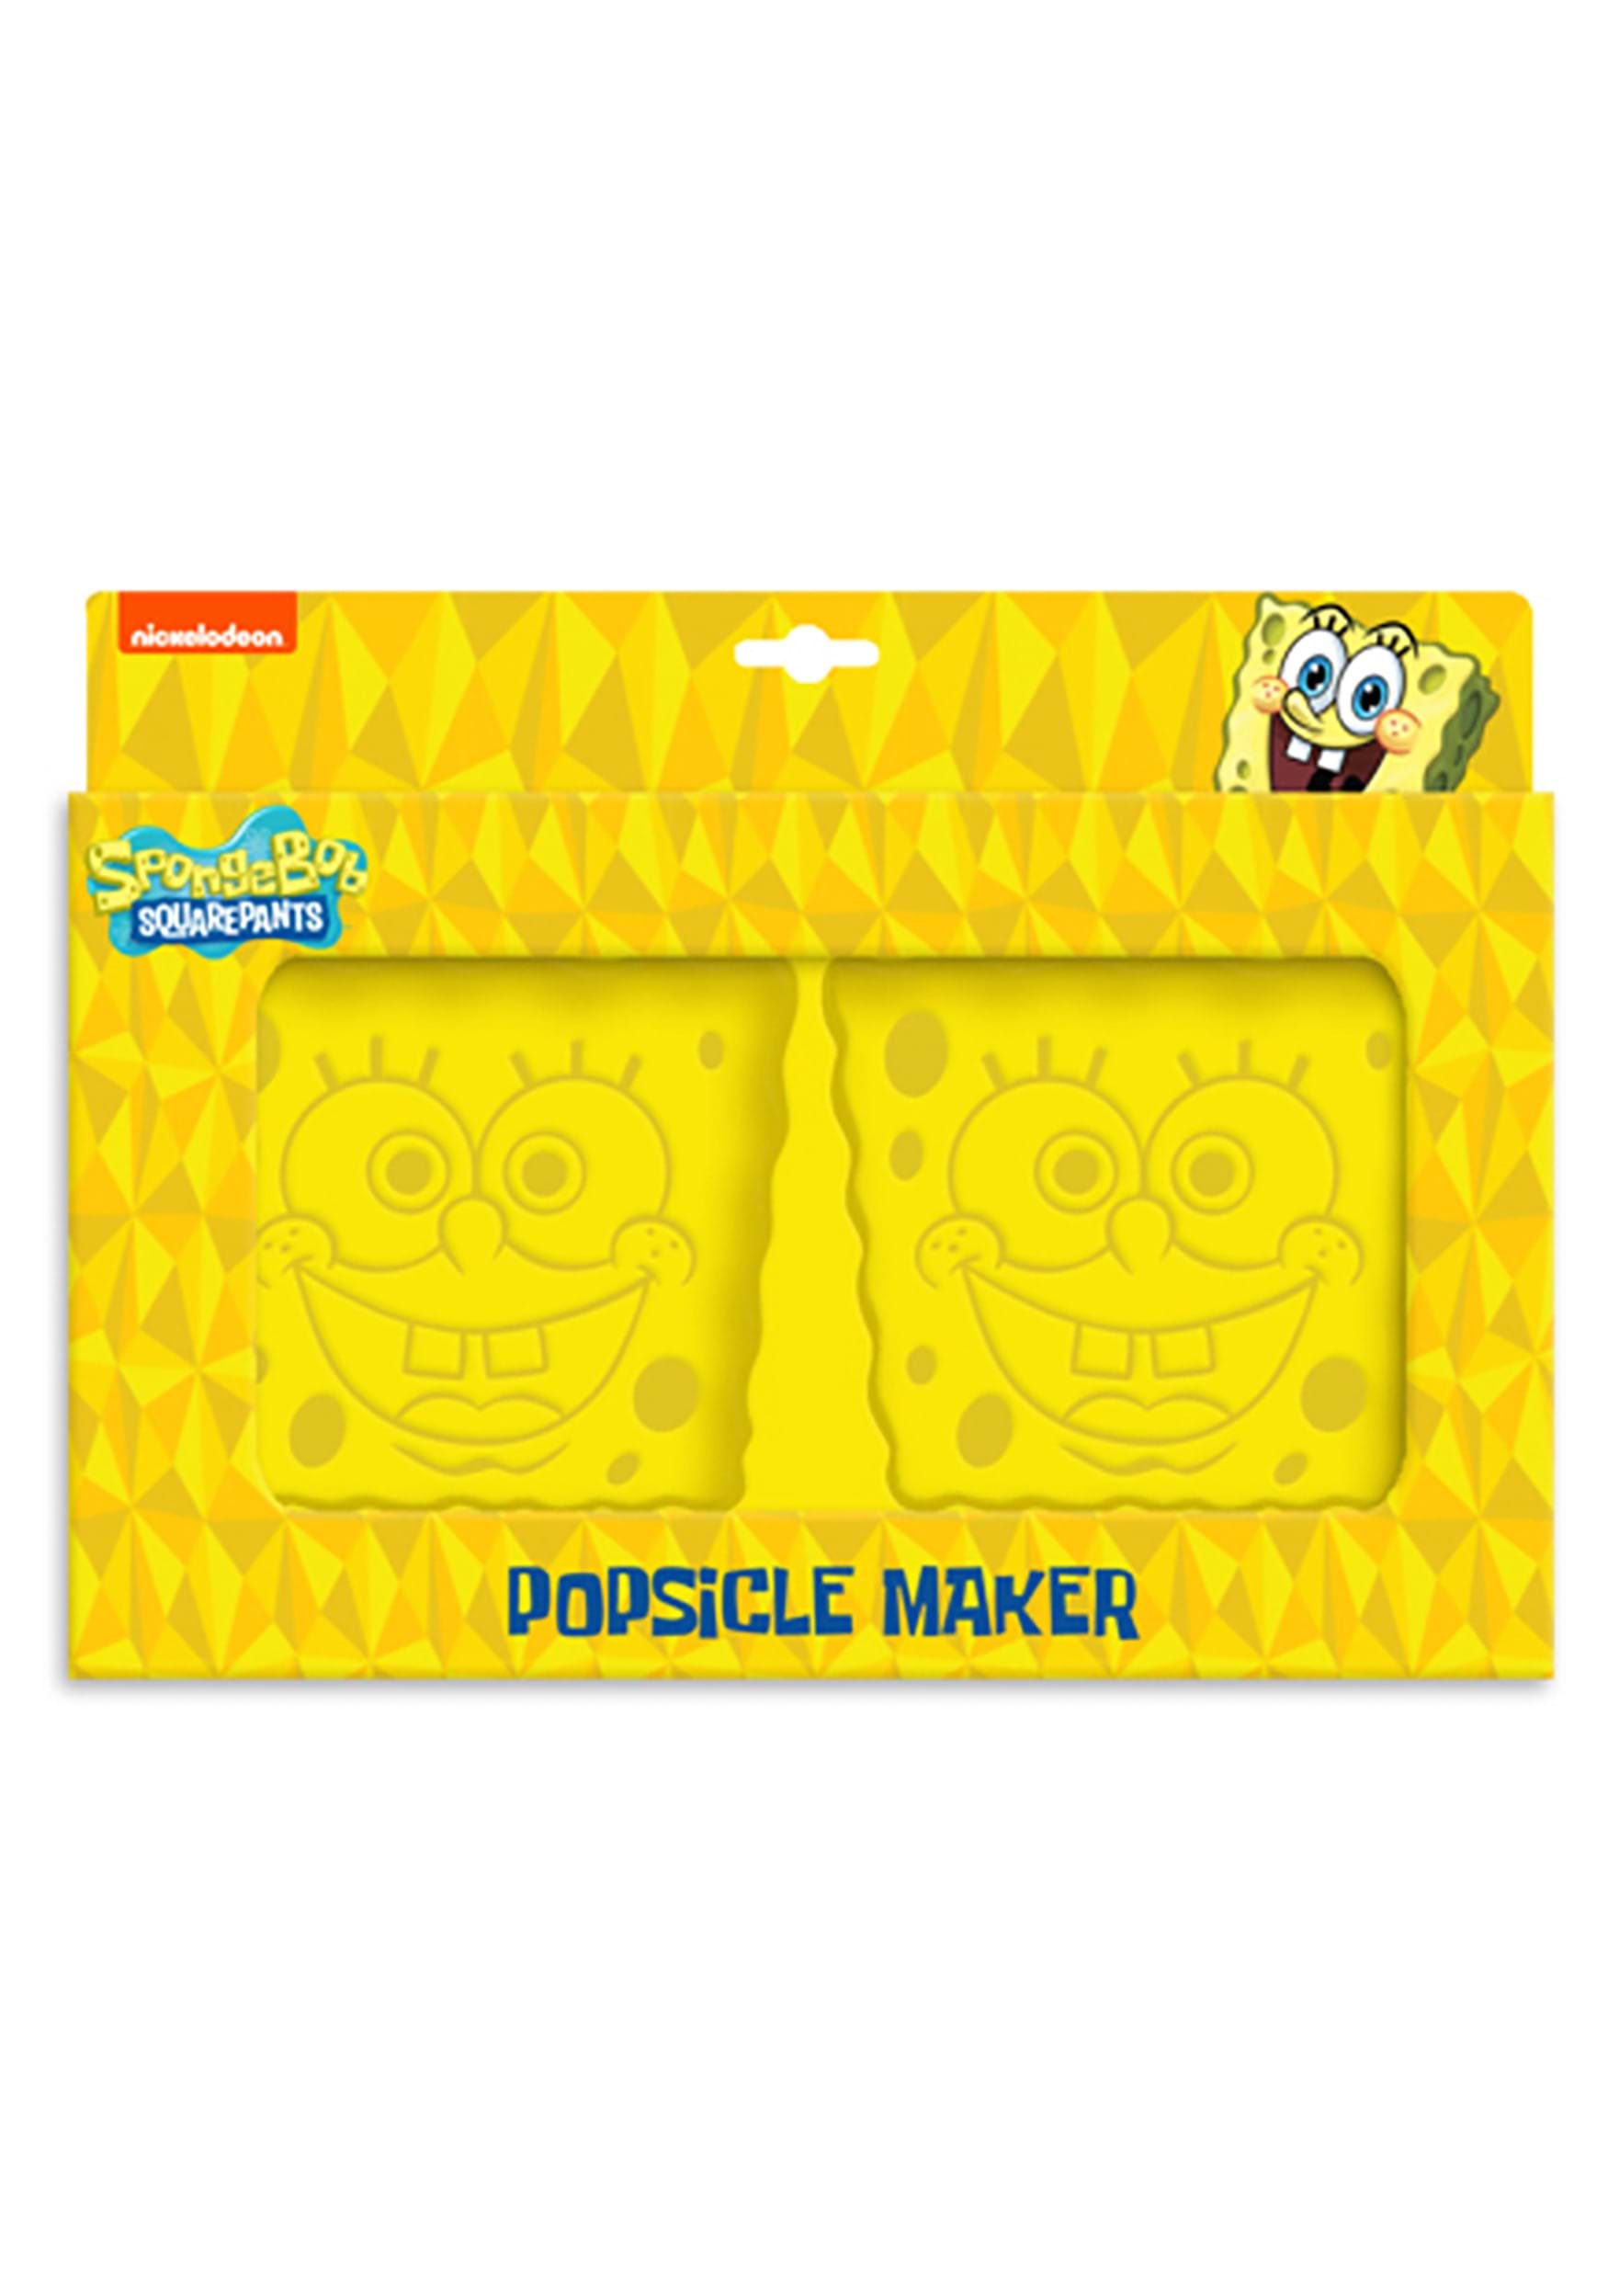 Spongebob Squarepants Popsicle Maker 2 Piece Set